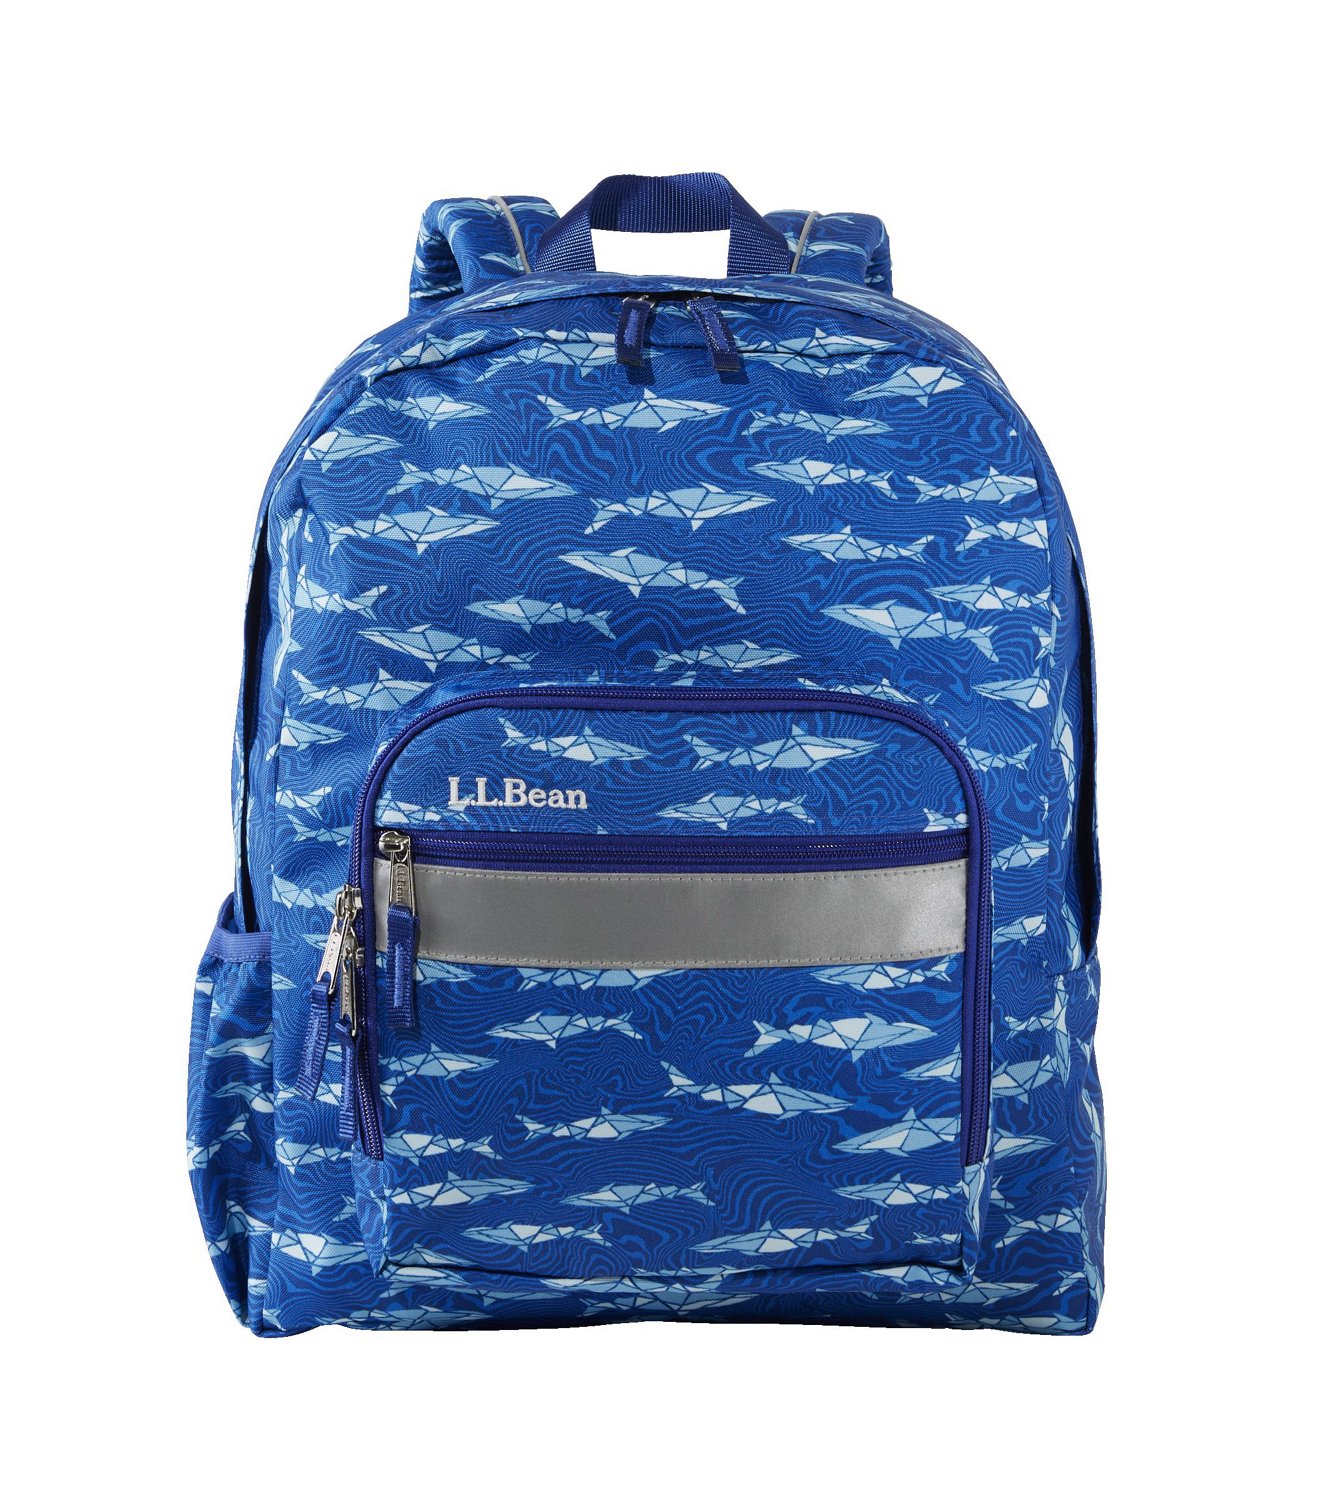 https://academy.scene7.com/is/image/academy//bags---backpacks/llbean-original-neon-shark-book-pack-5558-blue/4bb7c4a1cc4e438785430795b430f78c